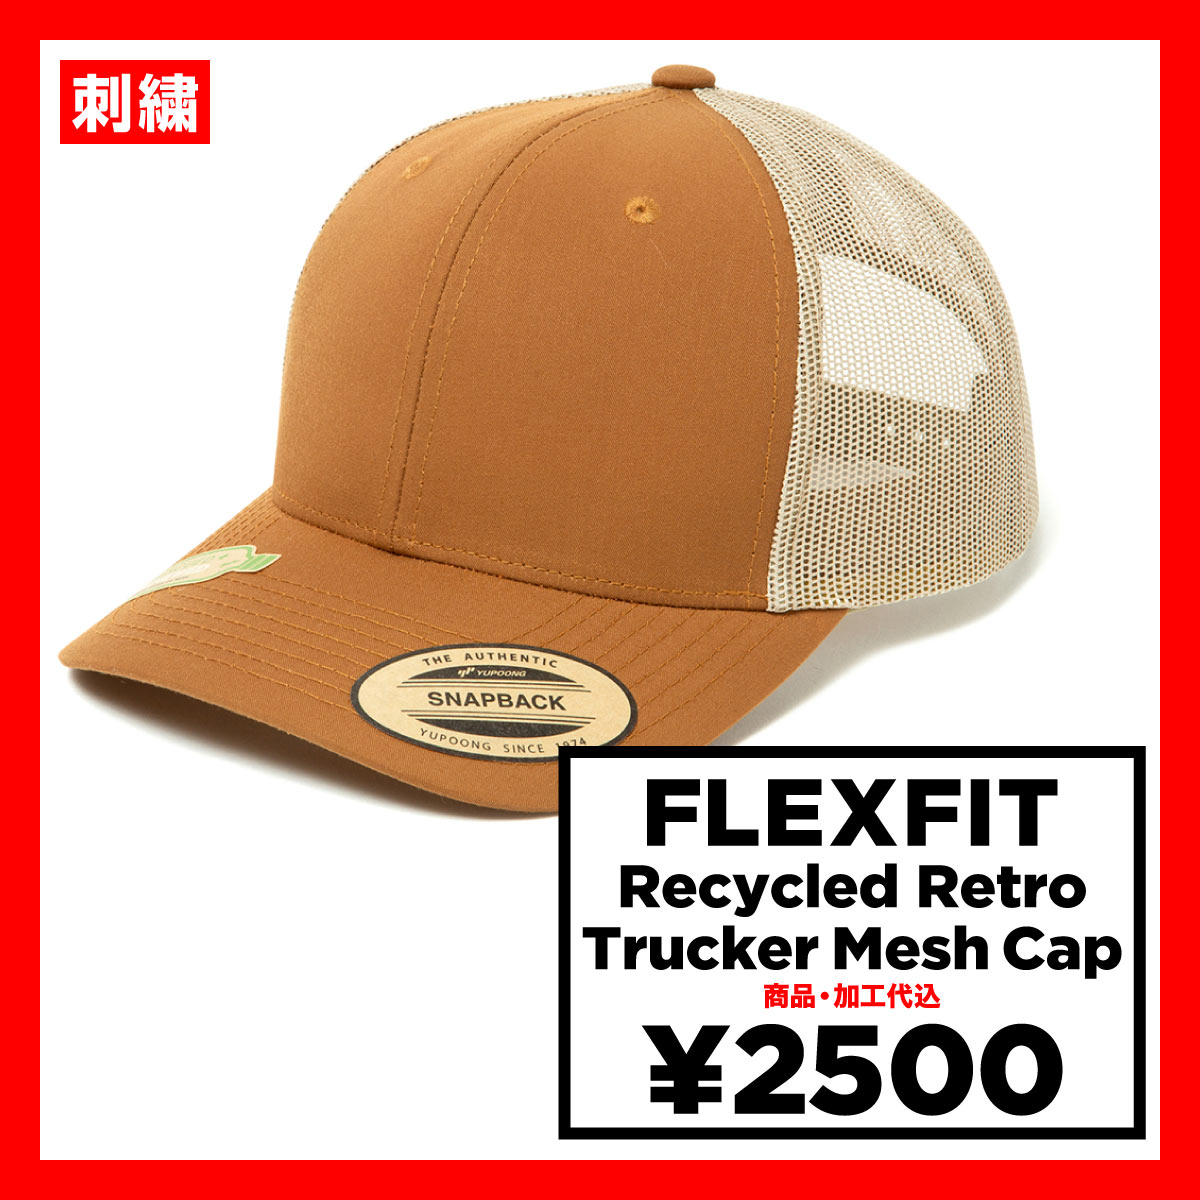 FLEXFIT フレックスフィット Recycled Retro Trucker Mesh Cap (品番FL6606R)